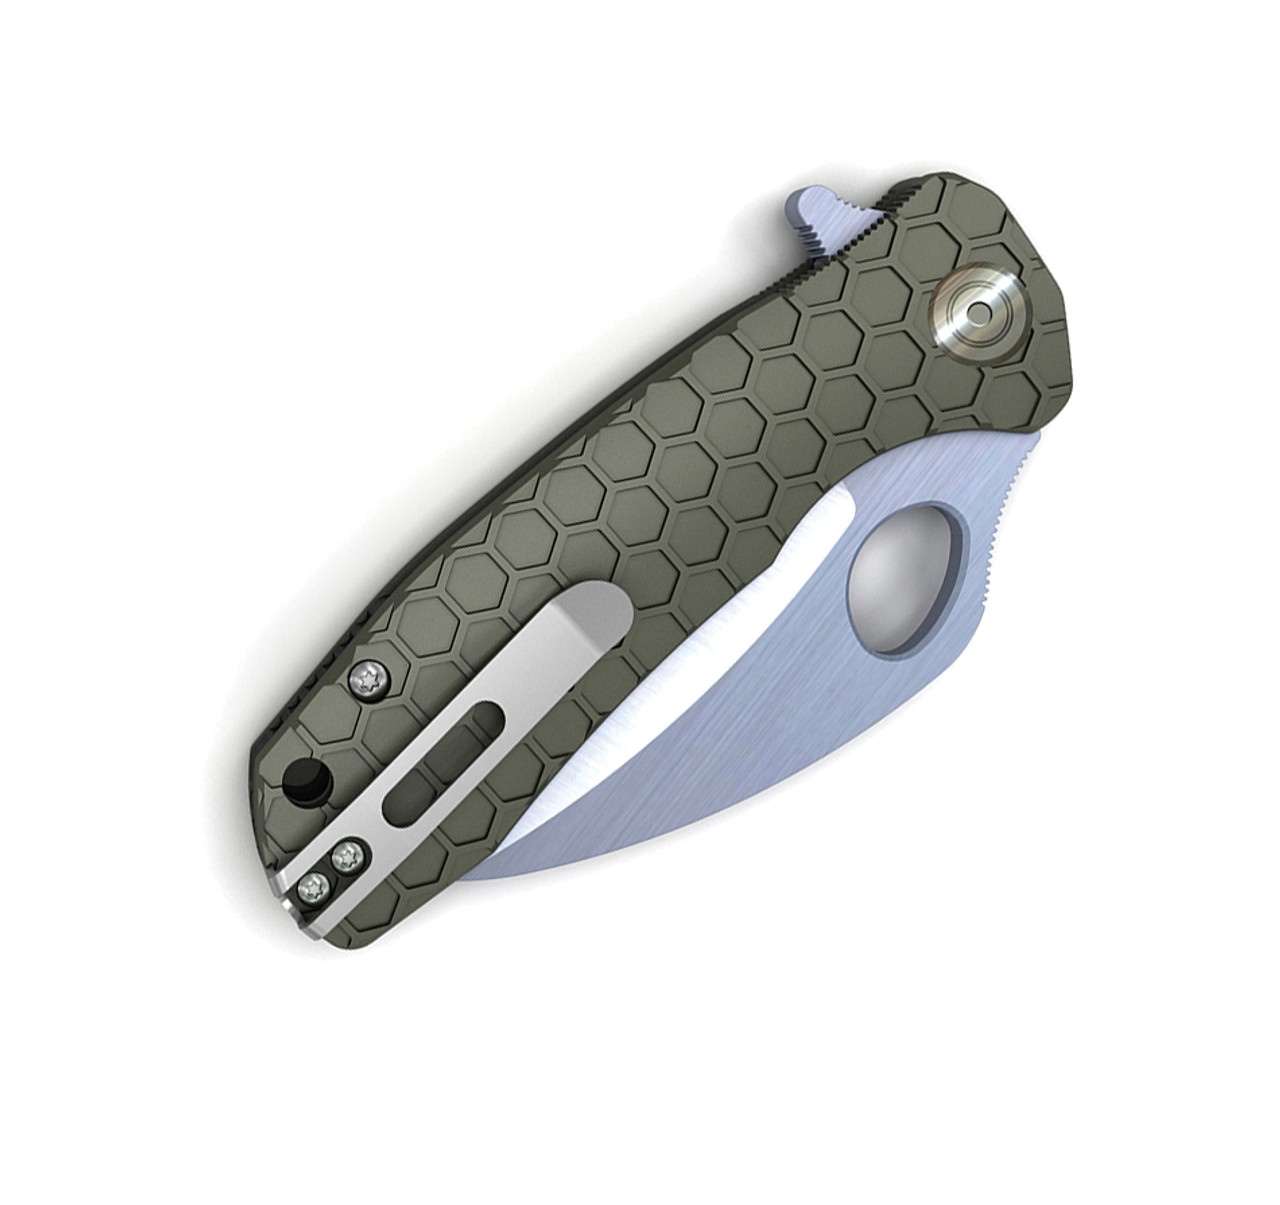 Honey Badger Knives Medium Claw Flipper HB1123, 3.0" 8Cr13Mov Claw Blade, Green FRN Handle